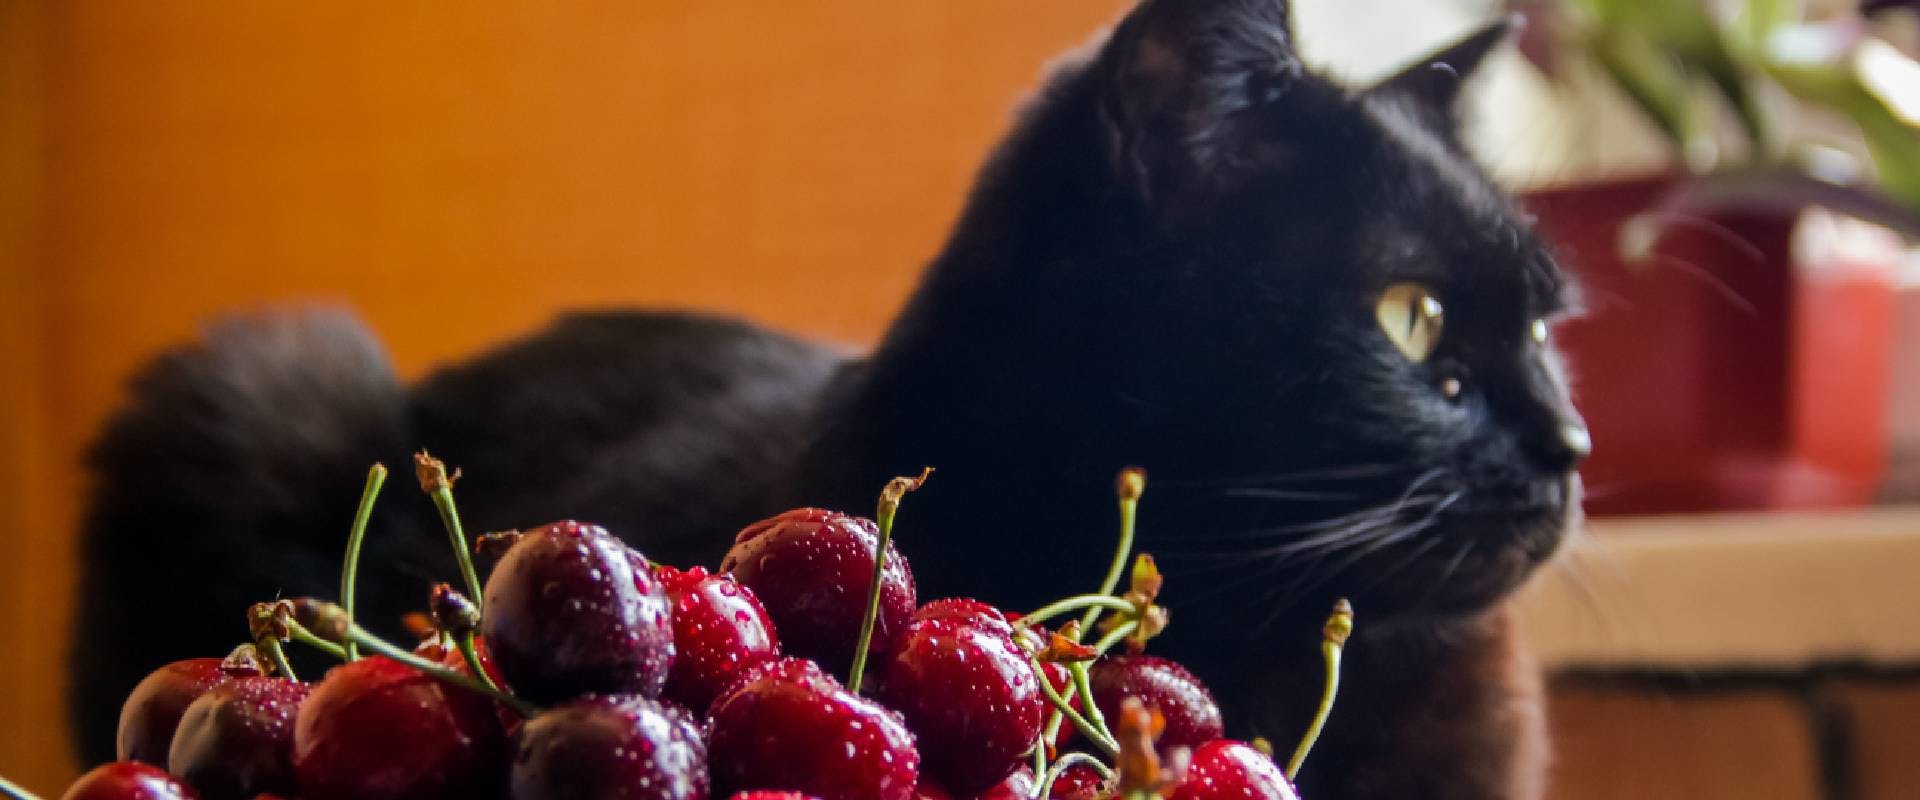 Black cat sitting behind a bowl of cherries